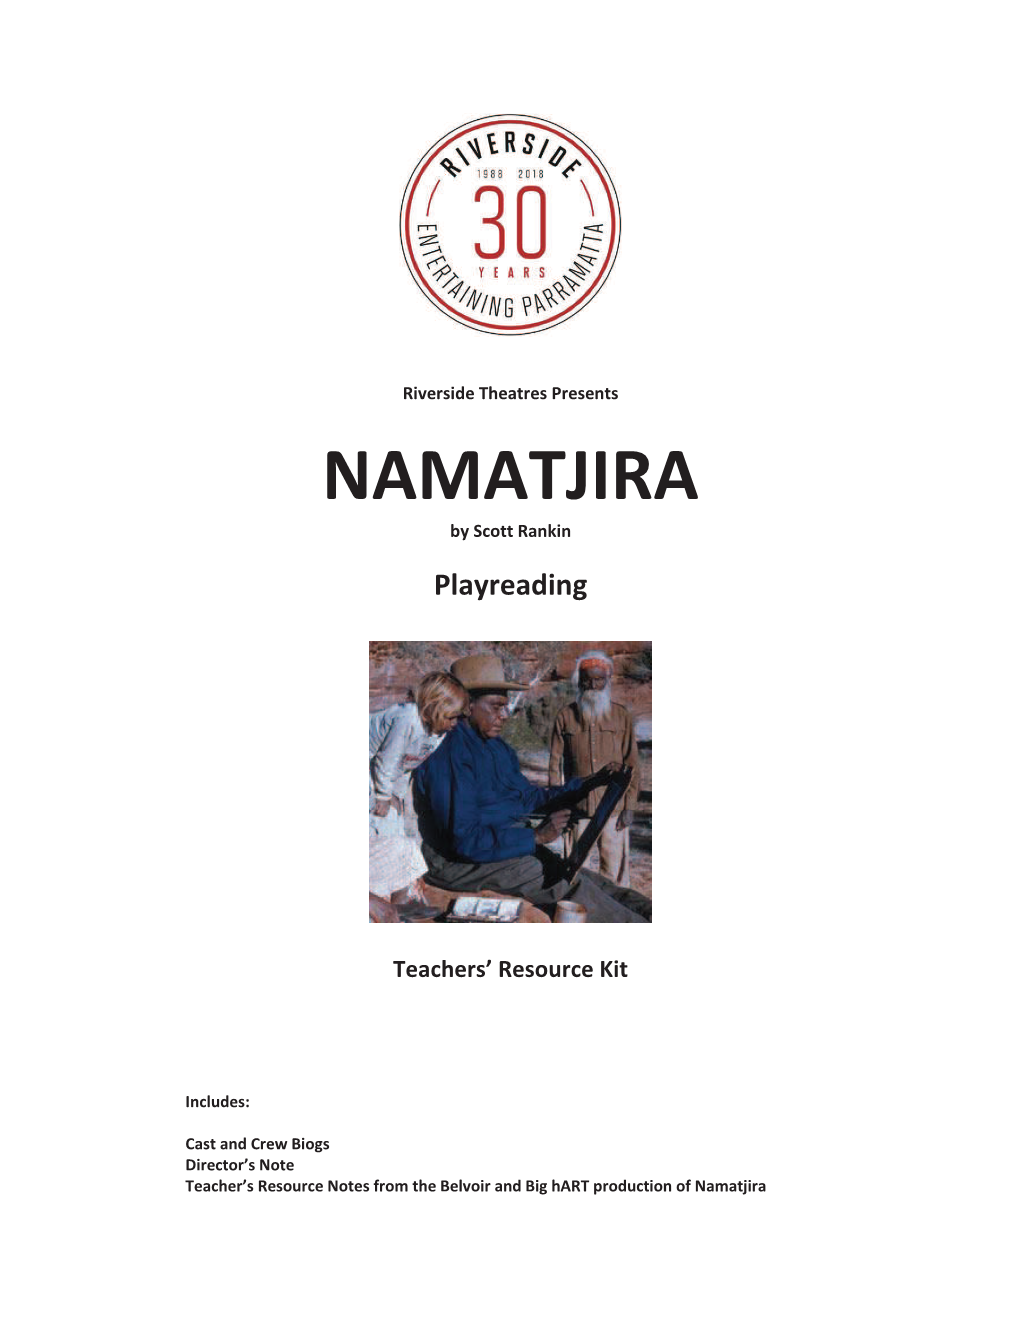 NAMATJIRA by Scott Rankin